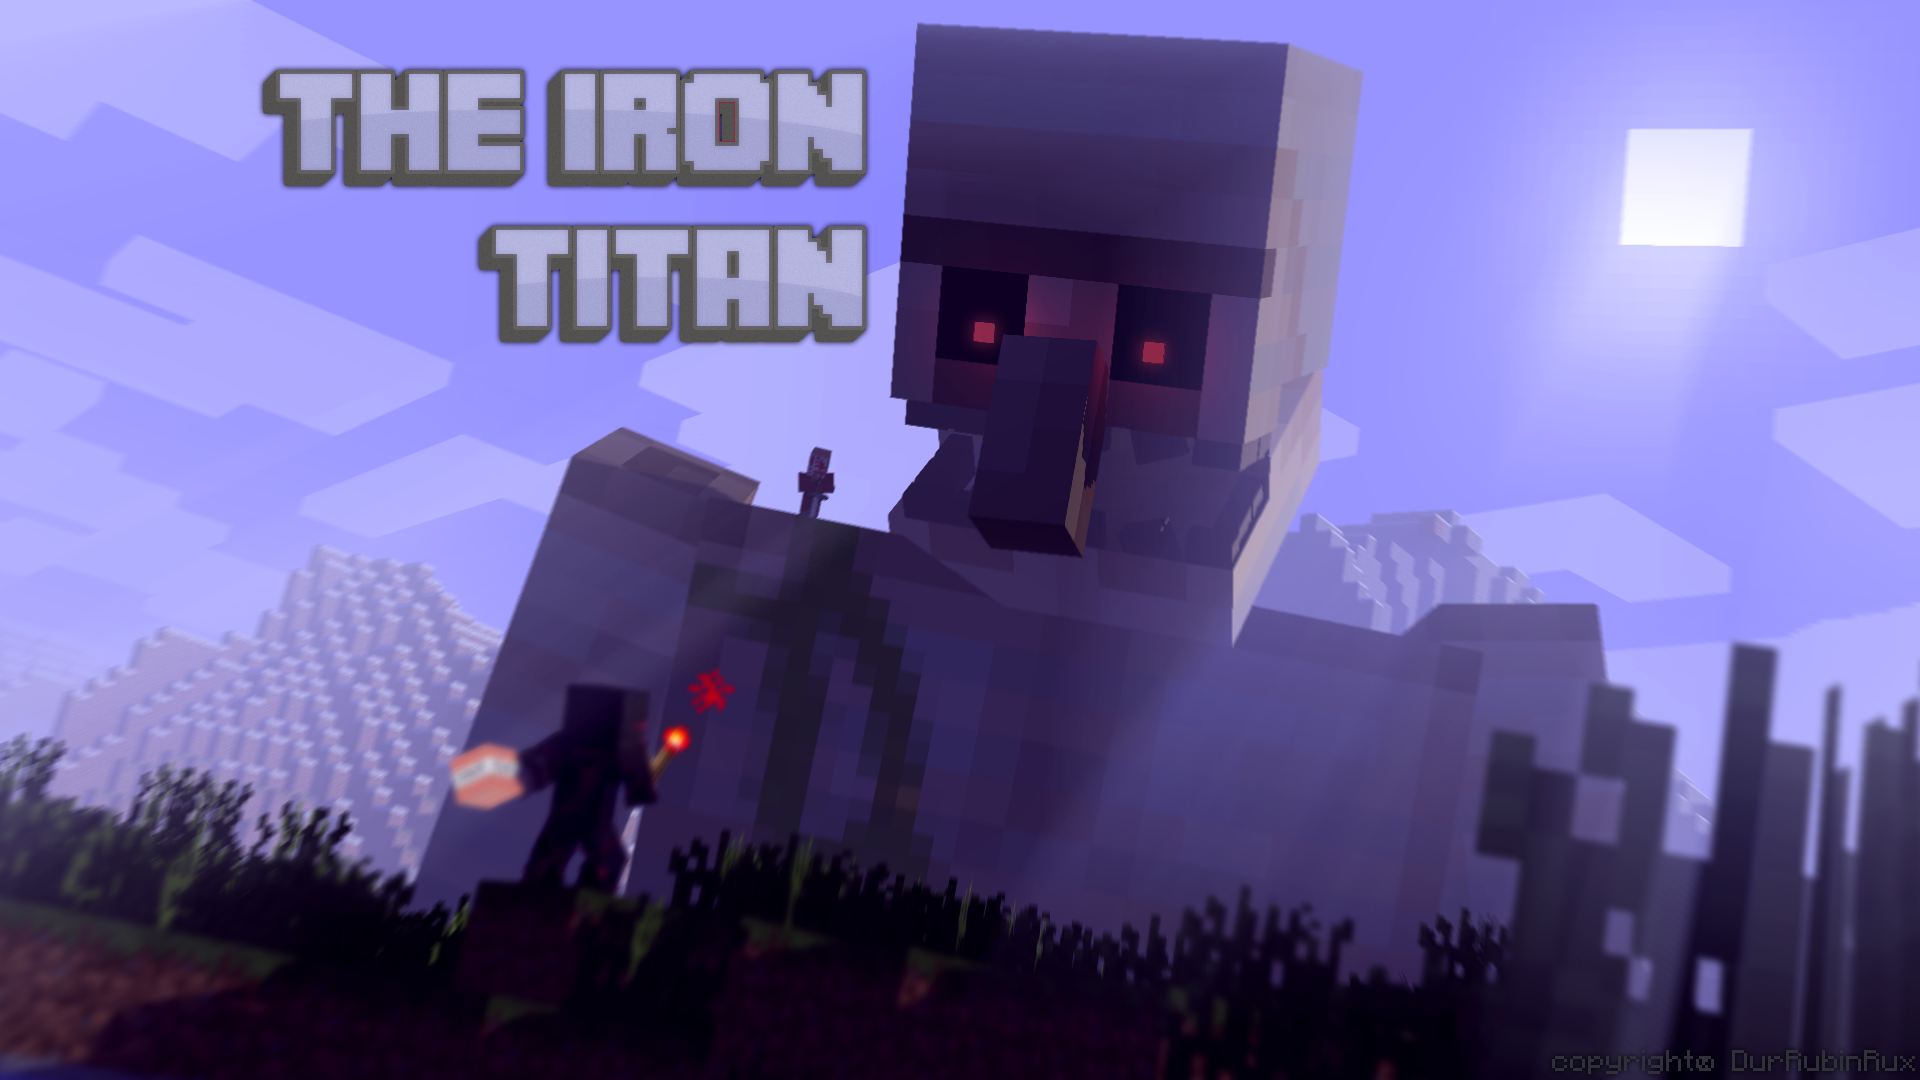 The Iron Titan [Wallpaper] And Art Imator Forums